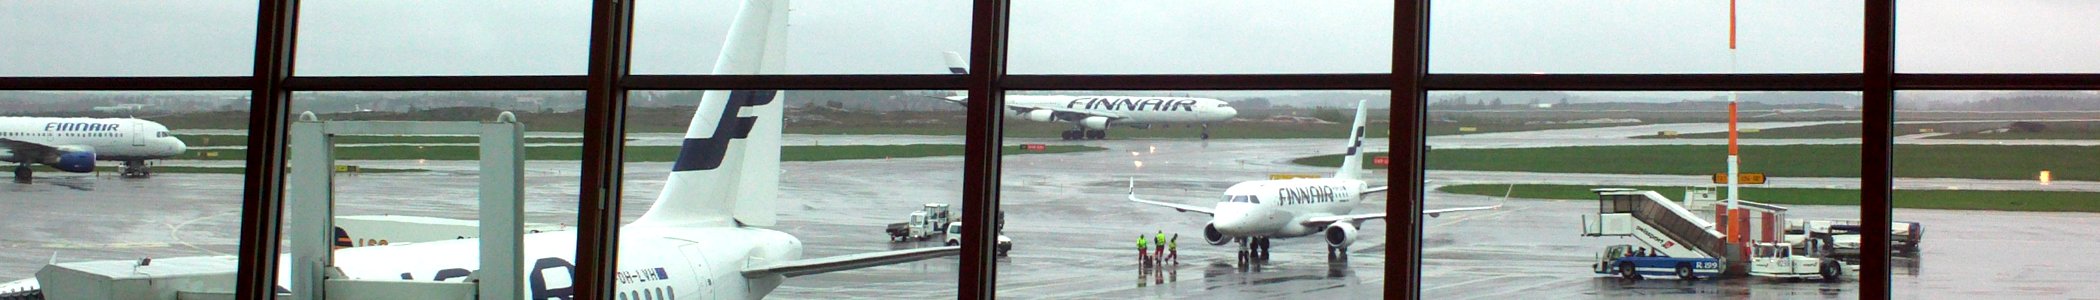 WV banner Helsinki Airport Finnair planes photo